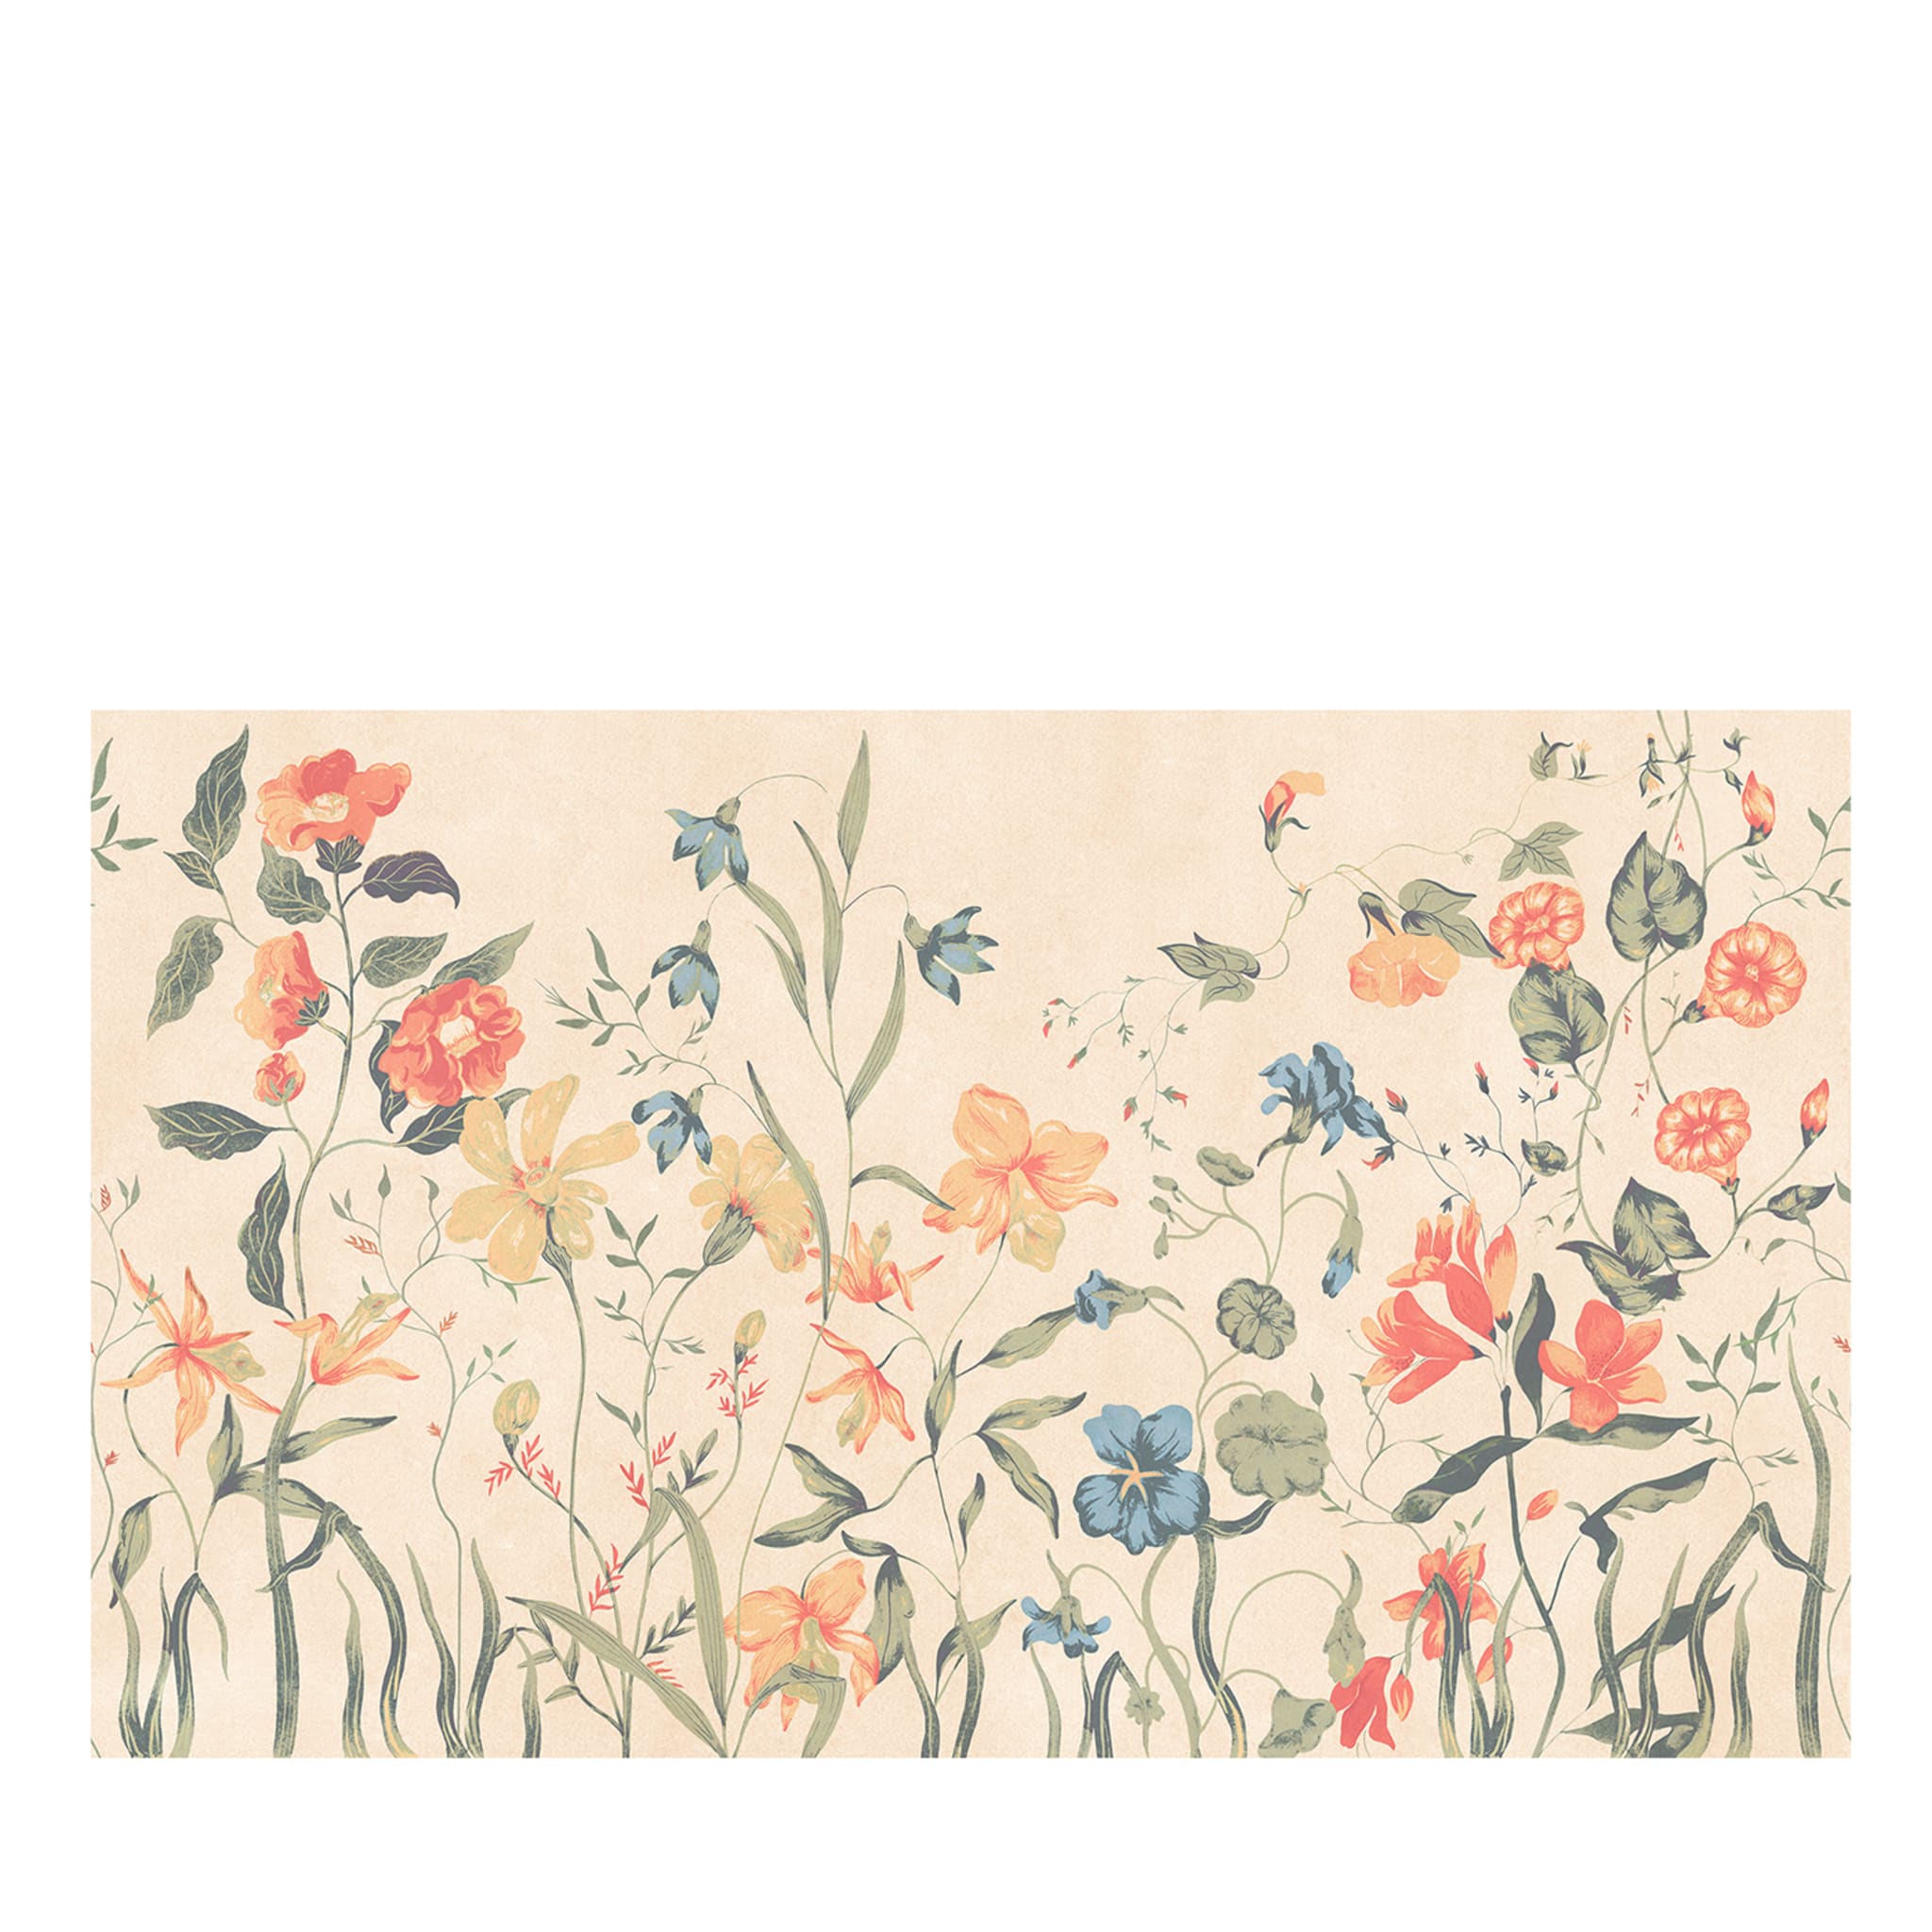 Flora Wallpaper by Sarah Edith #2 - Main view